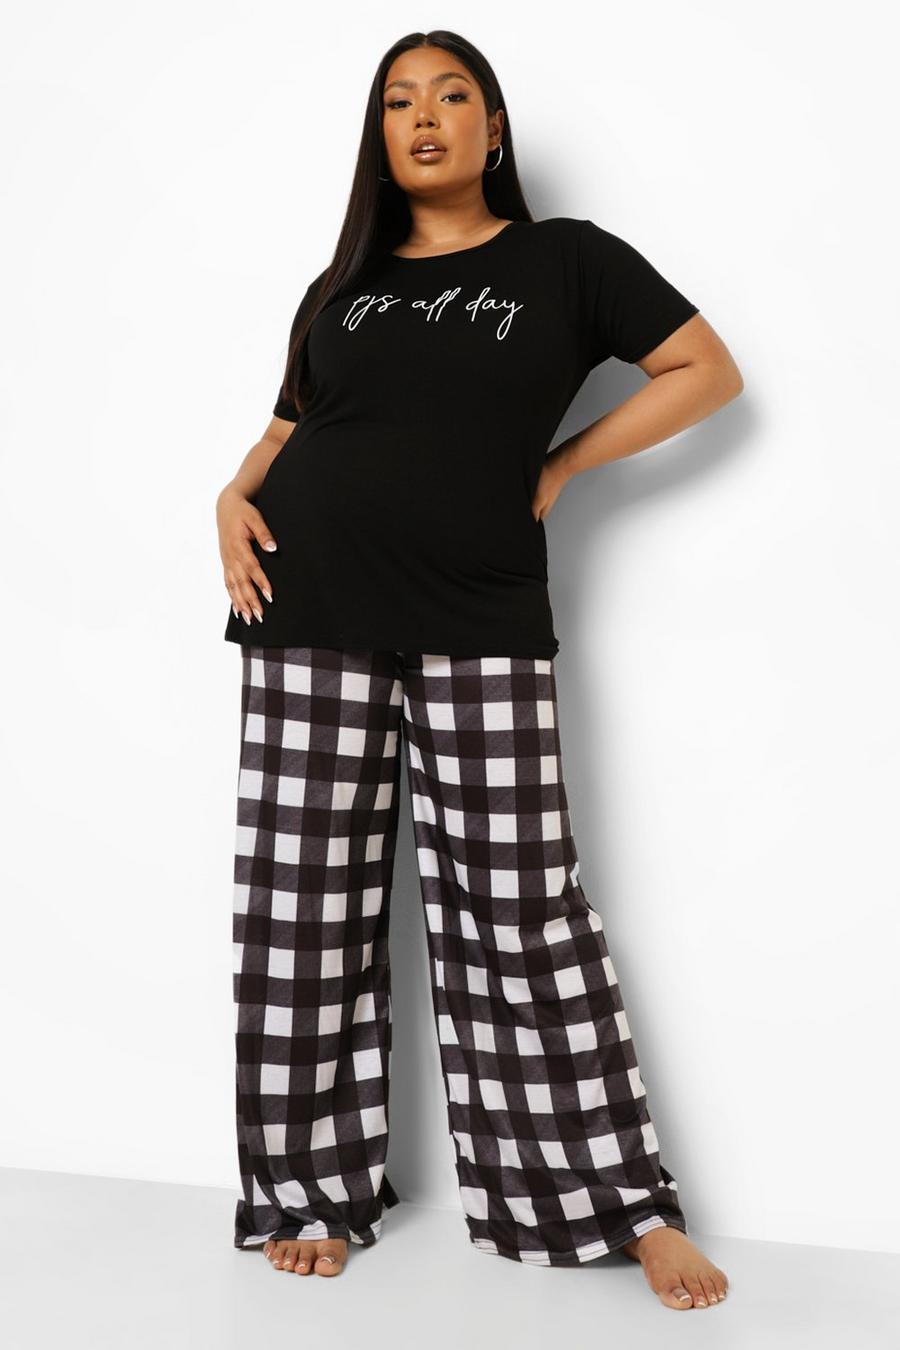 Black nero Plus 'PJs All Day' Slogan Top & Gingham Trousers Pyjama Set